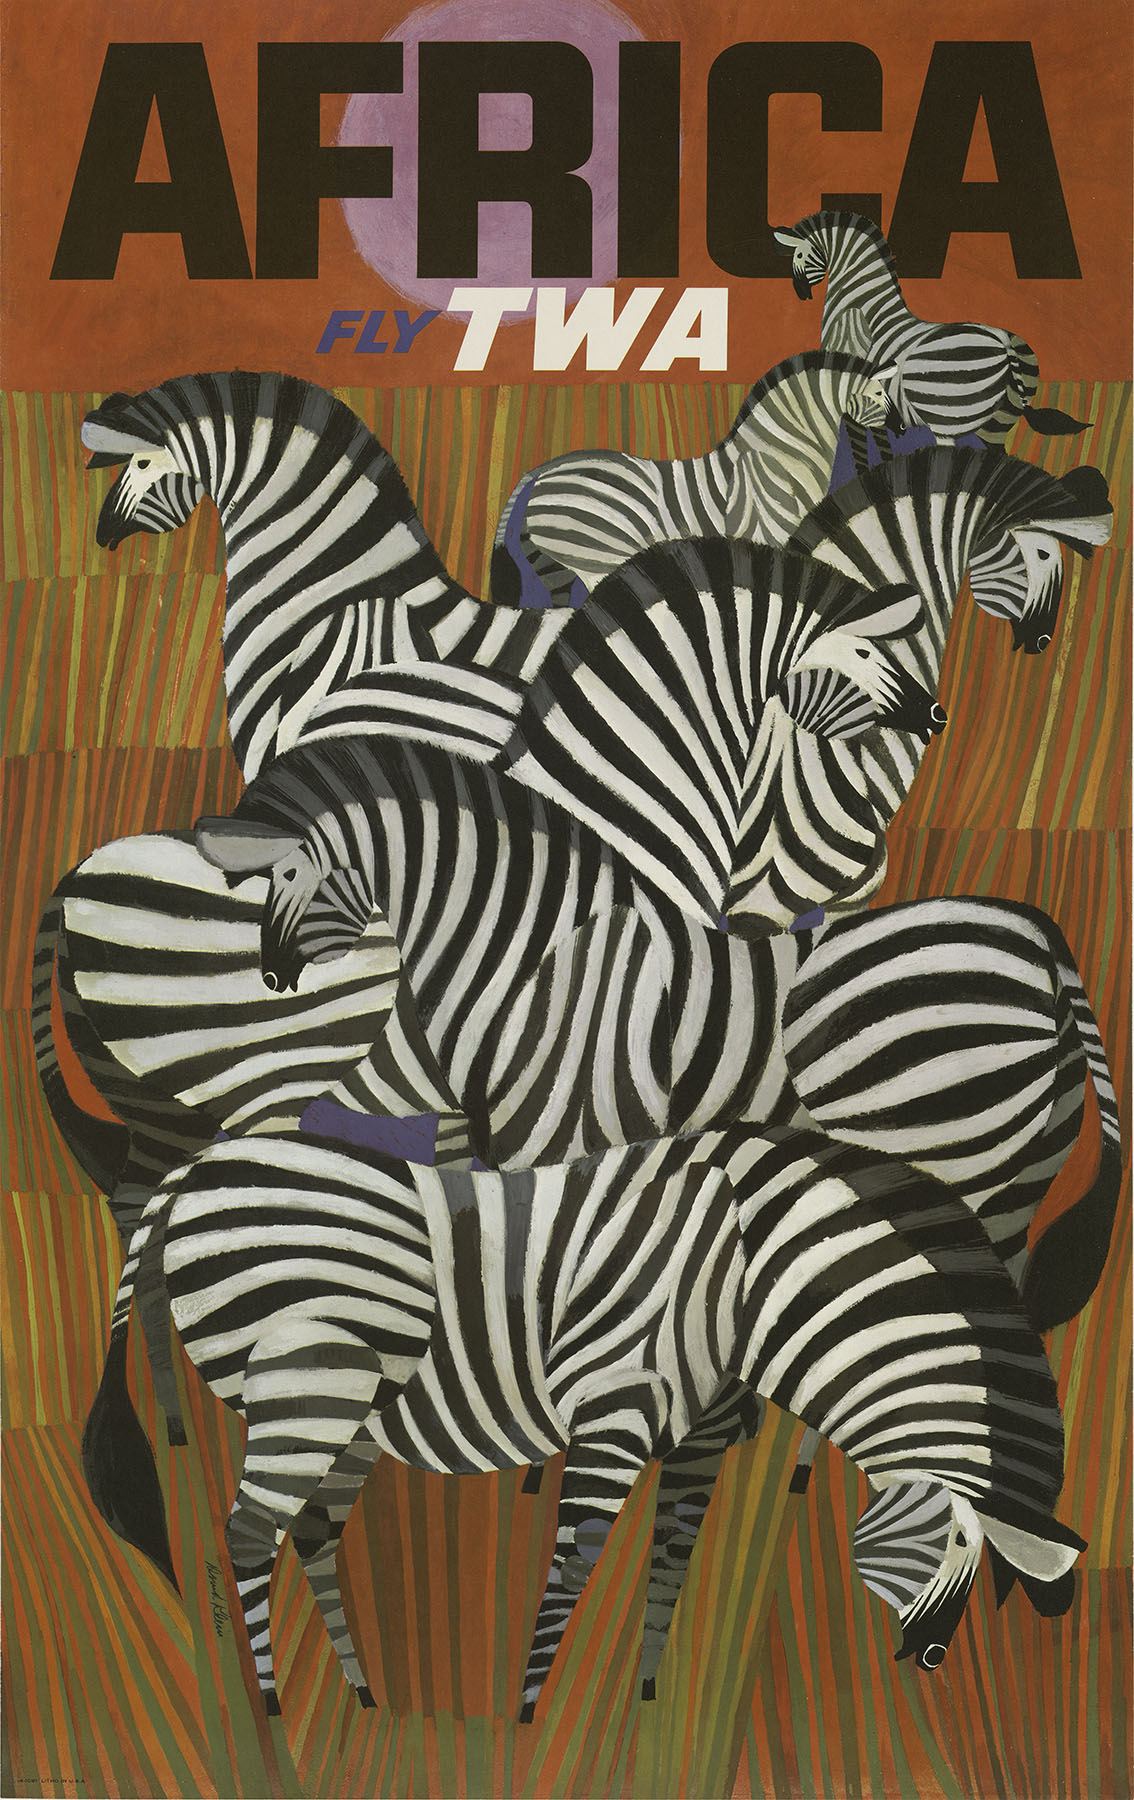 David Klein, Africa, Vintage travel poster